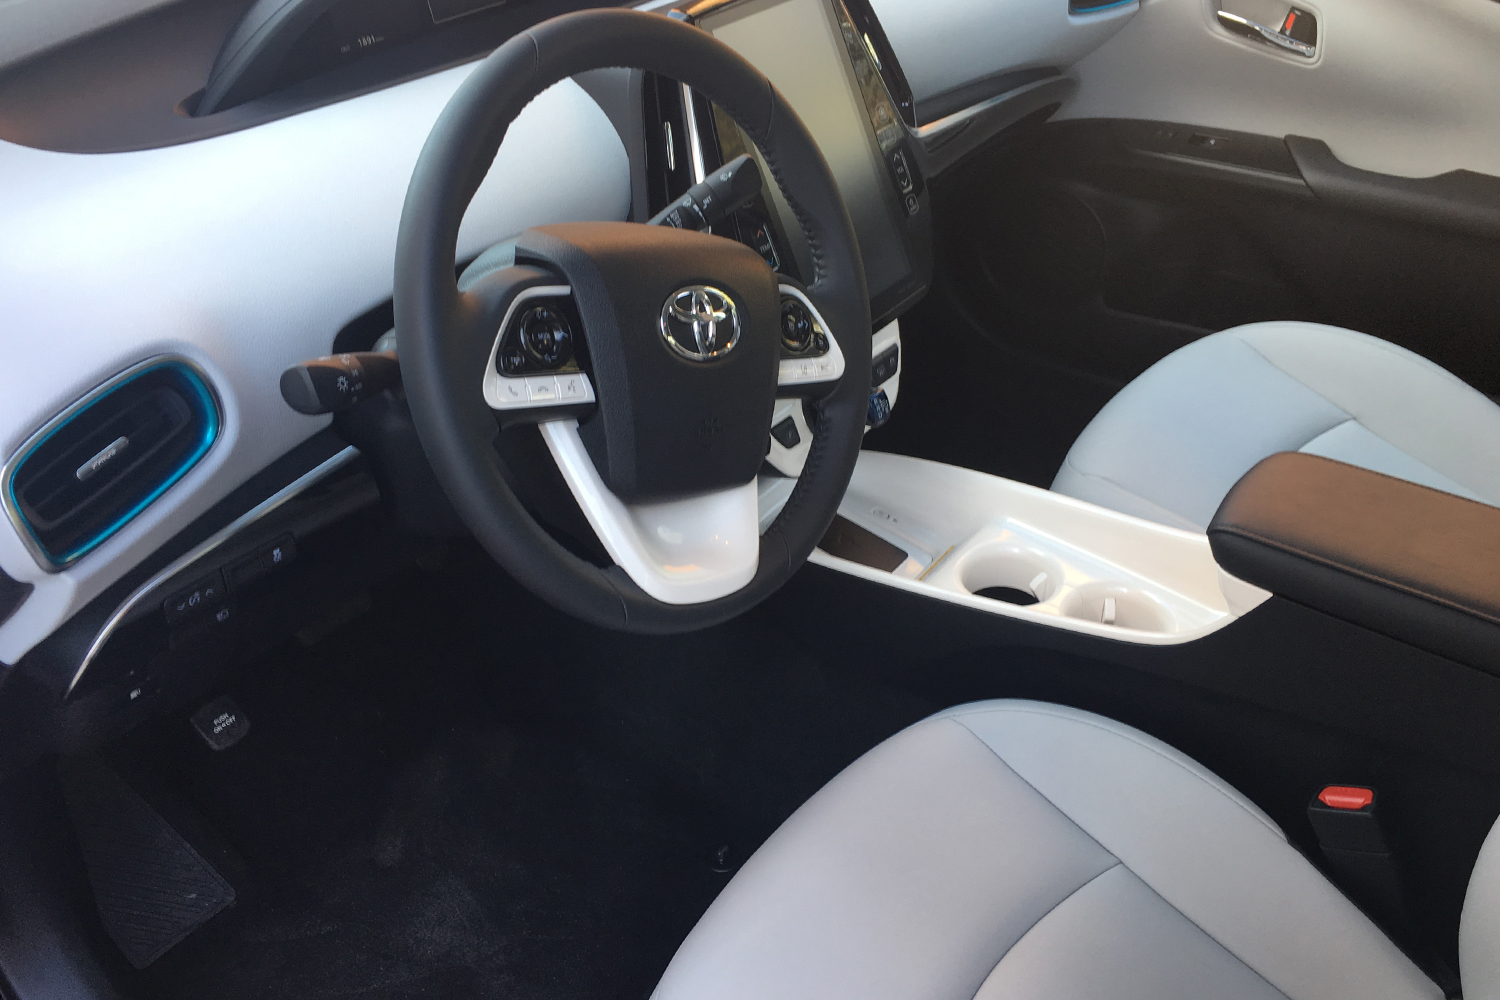 2017 Toyota Prius Prime Review